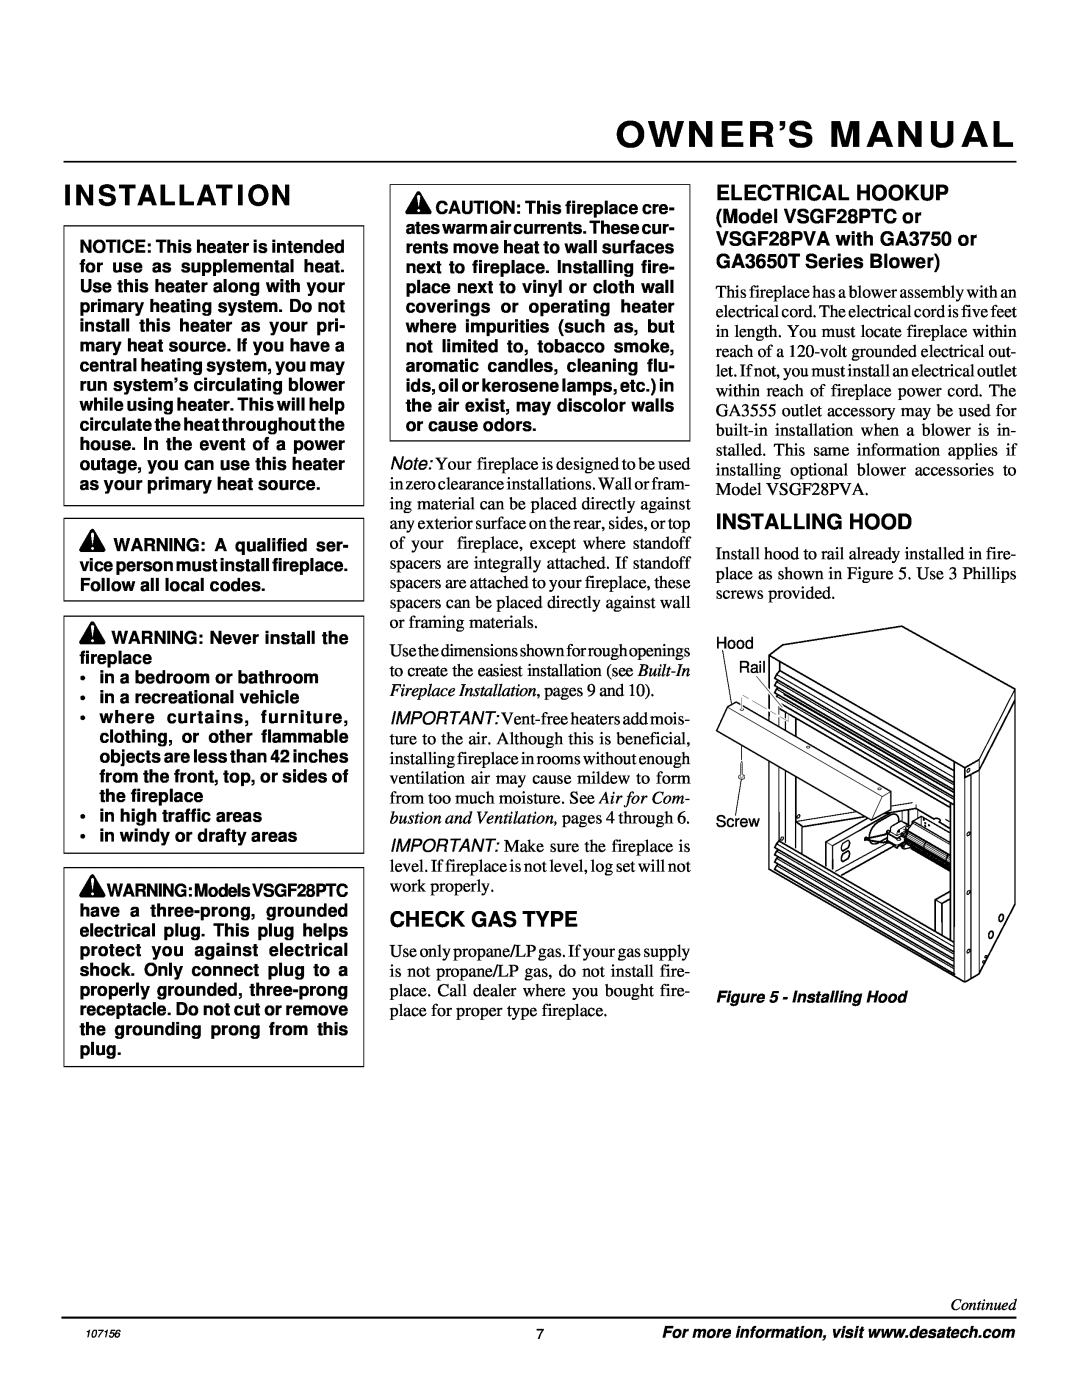 Vanguard Heating VSGF28PVA, VSGF28PTC installation manual Installation, Check Gas Type, Electrical Hookup, Installing Hood 